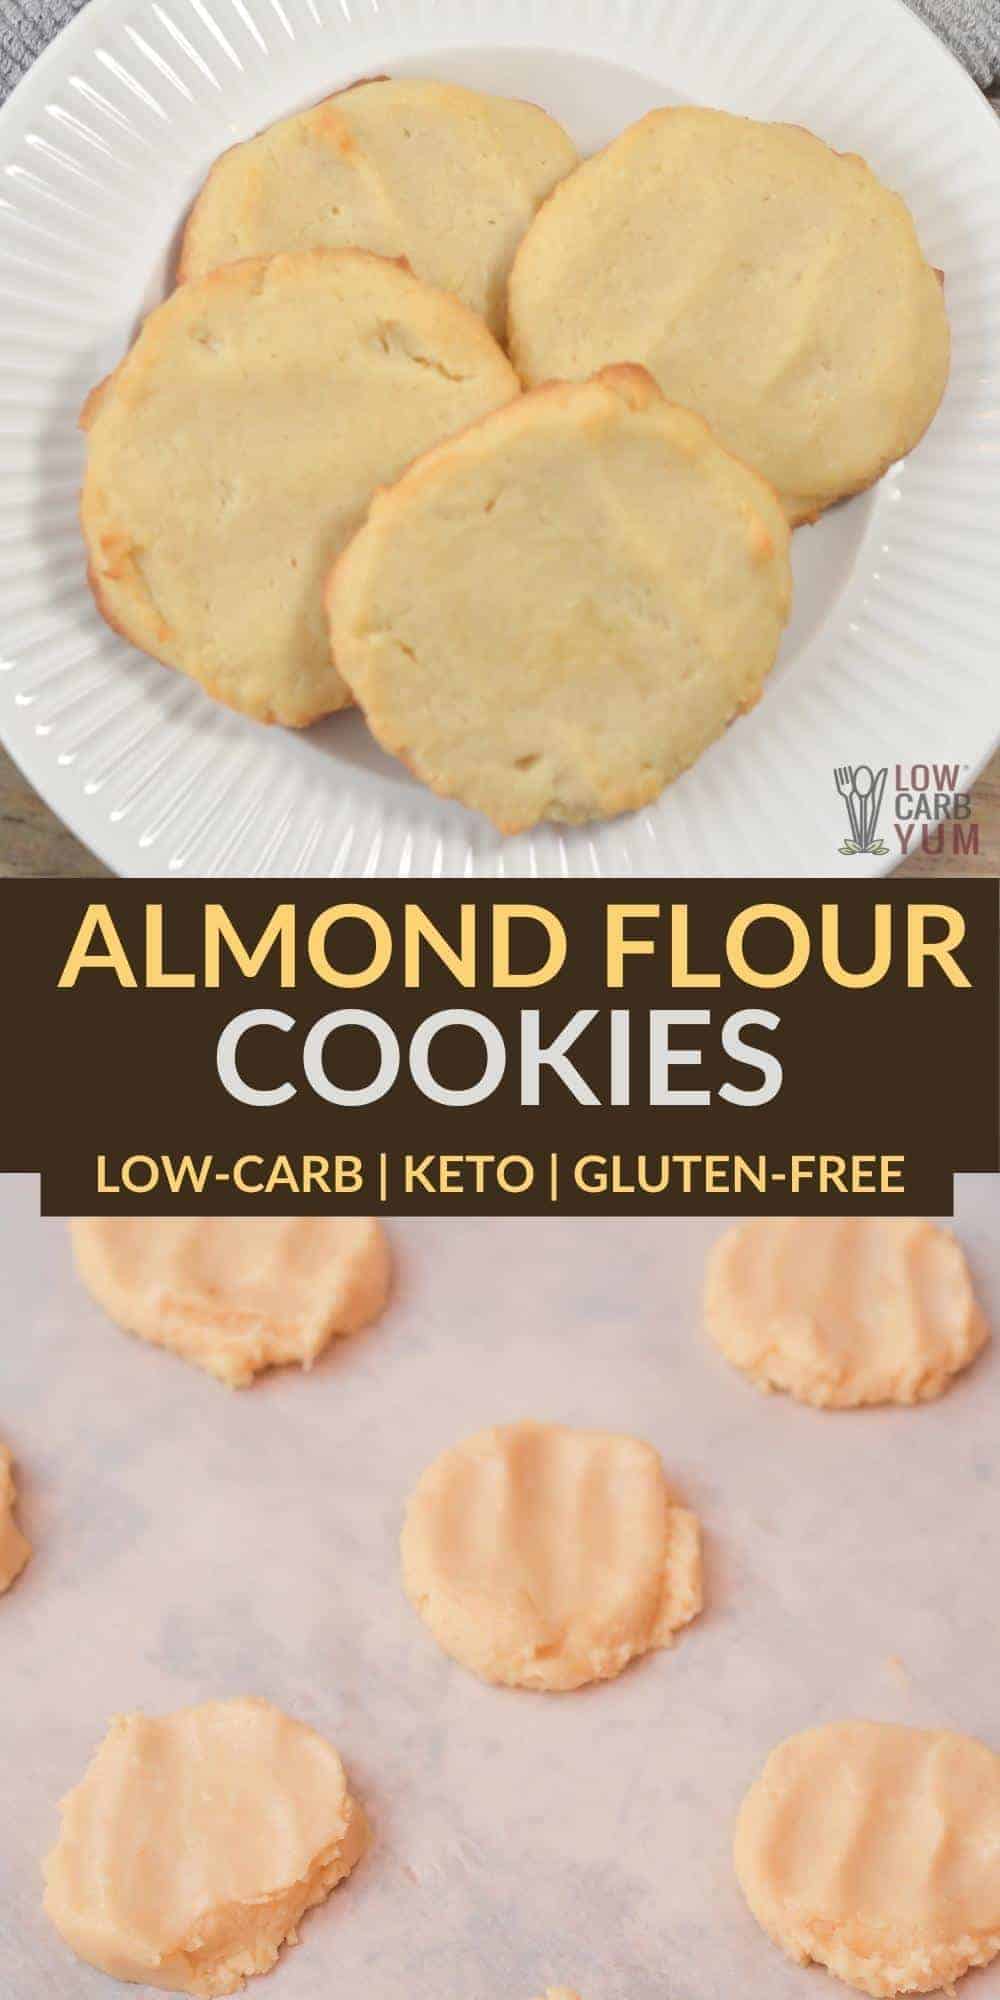 almond flour cookies pinterest image.